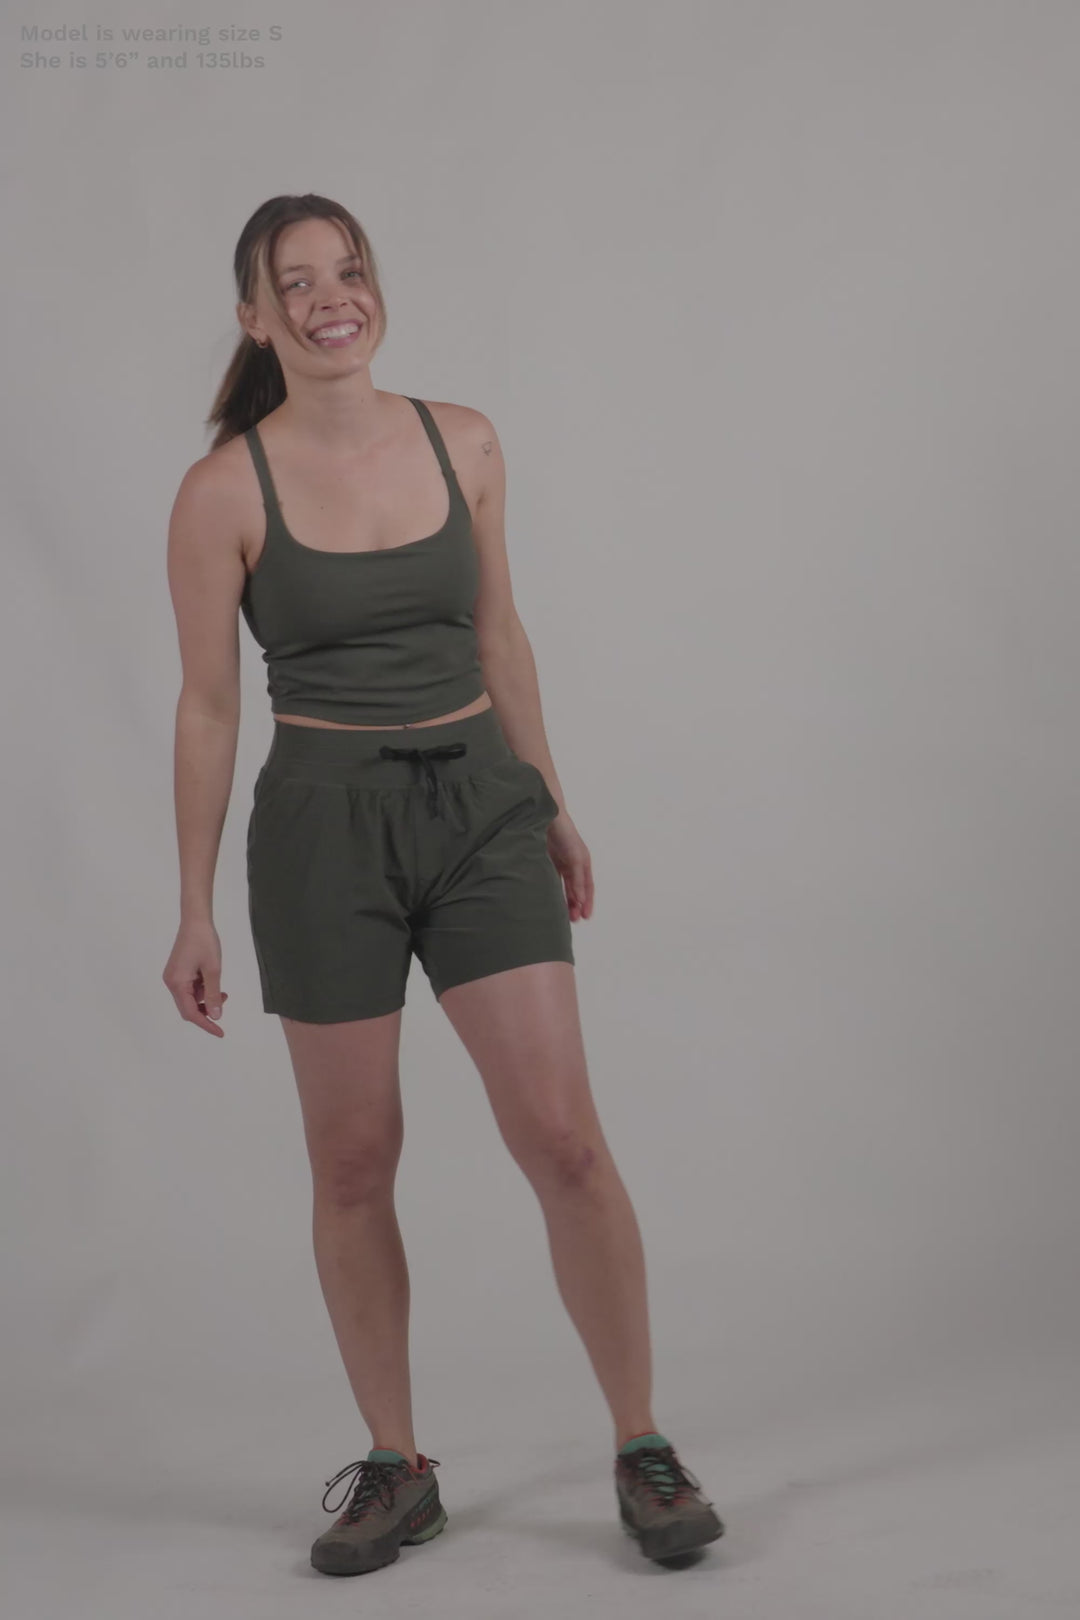 Women’s 5” High-Rise La Plata Shorts